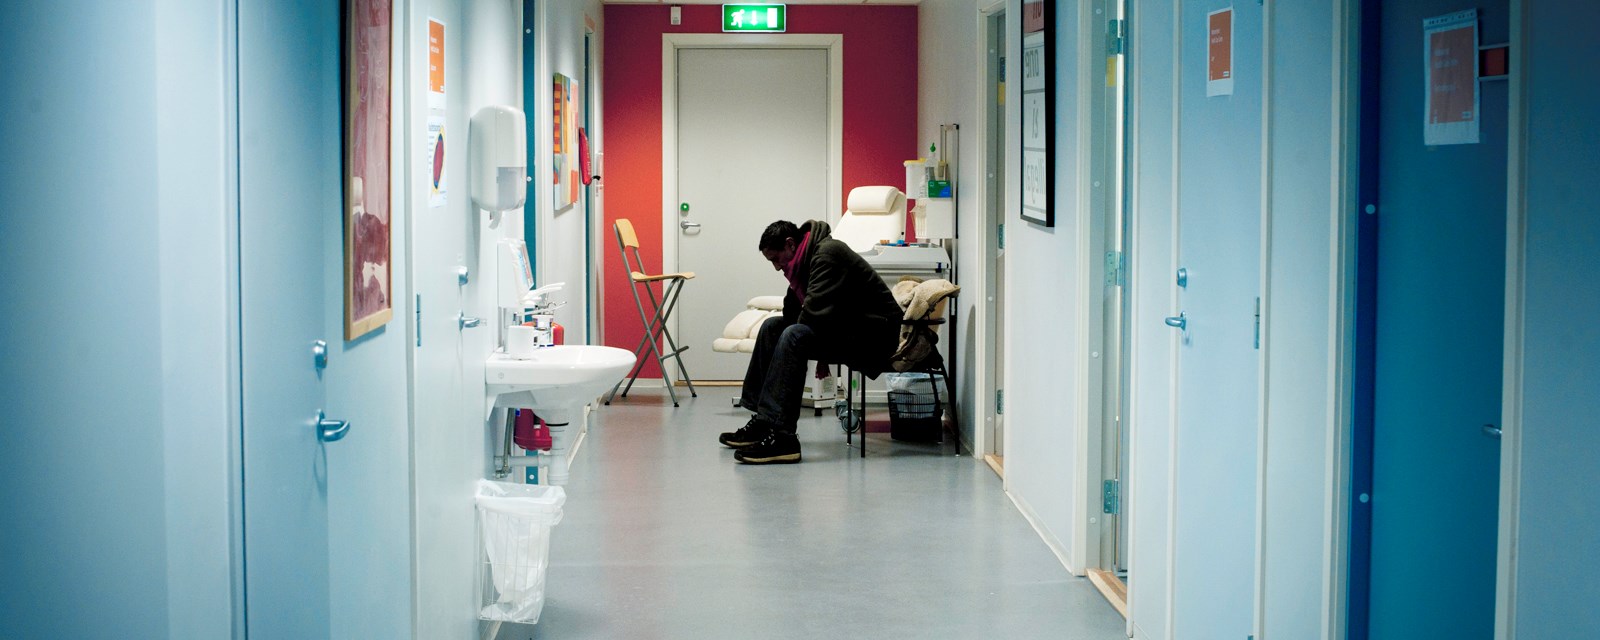 En pasient venter i en sykehusgang